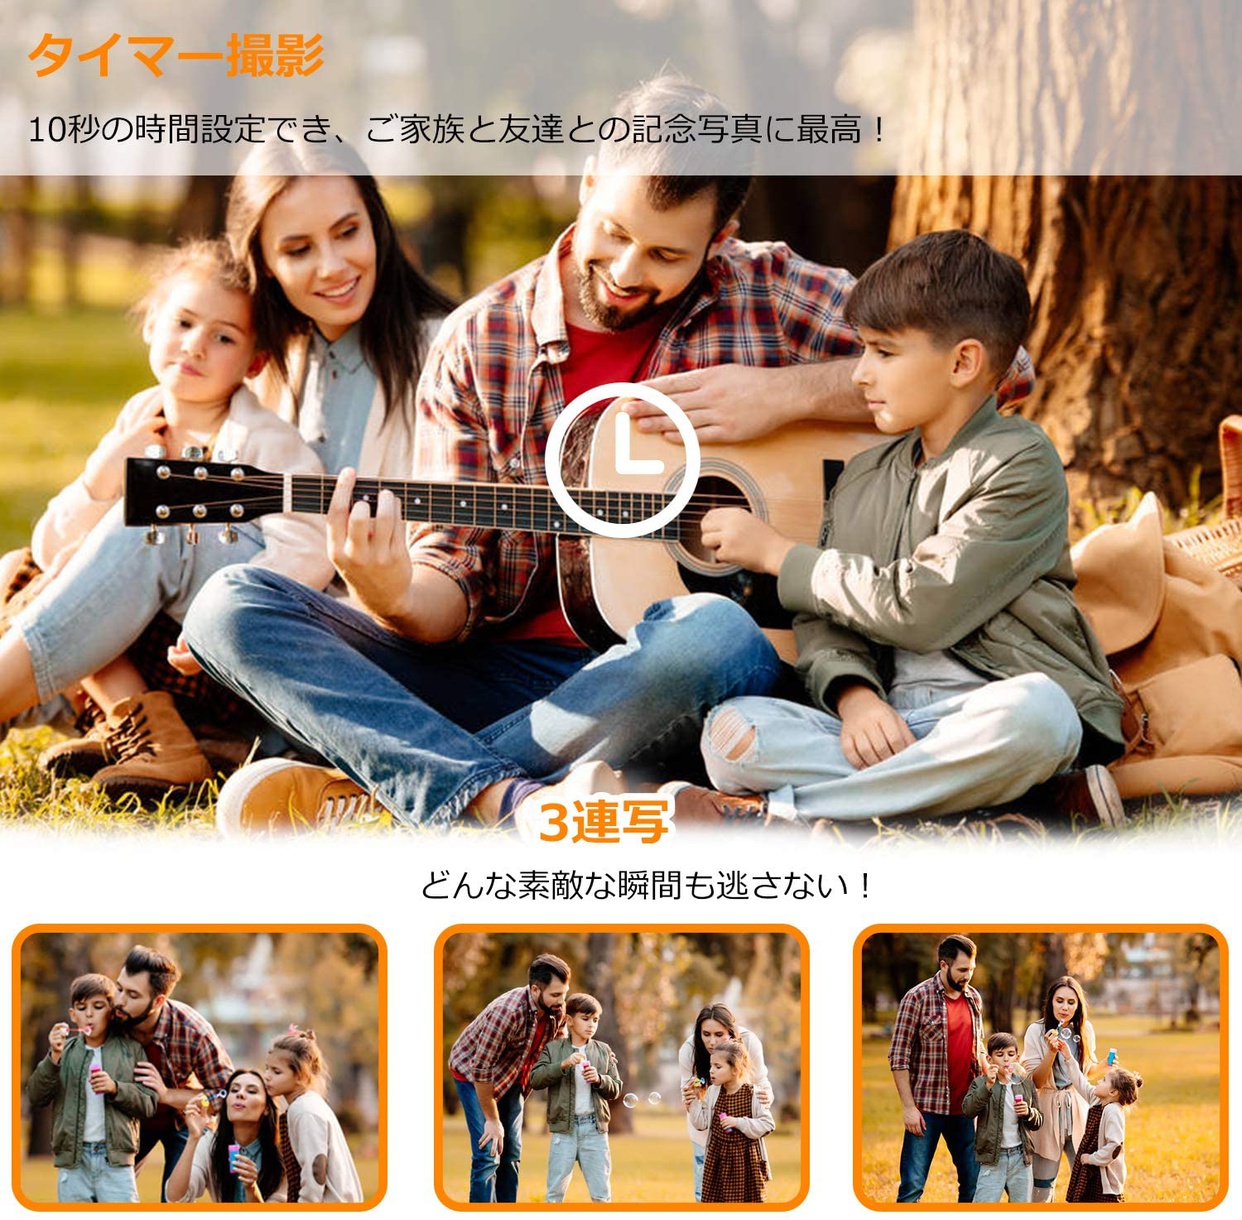 WisFox(ウィスフォックス) 子供用デジタルカメラの商品画像5 